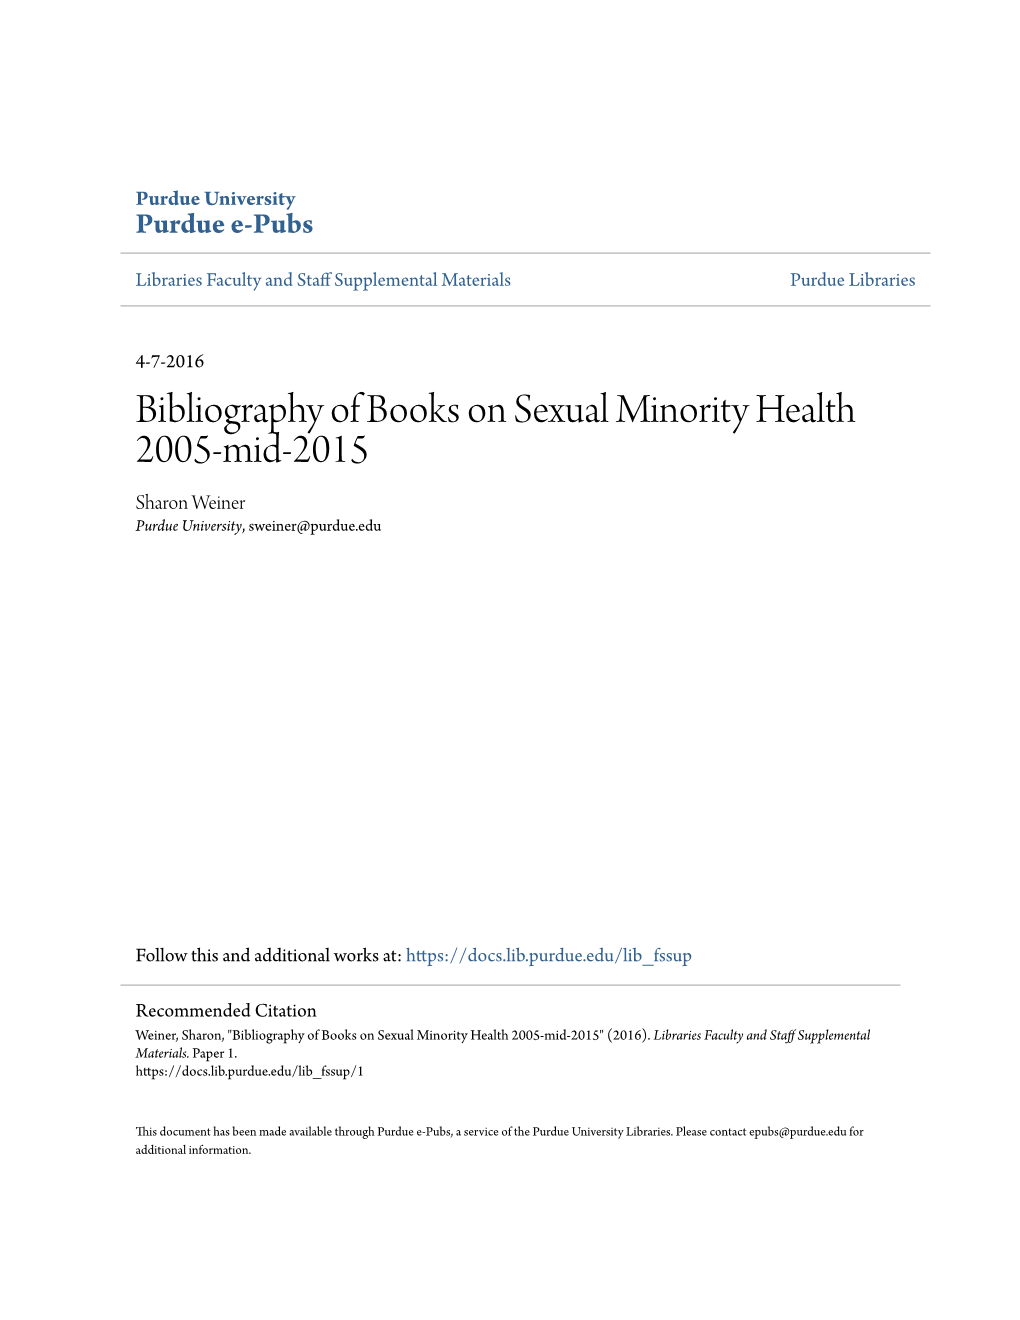 Bibliography of Books on Sexual Minority Health 2005-Mid-2015 Sharon Weiner Purdue University, Sweiner@Purdue.Edu